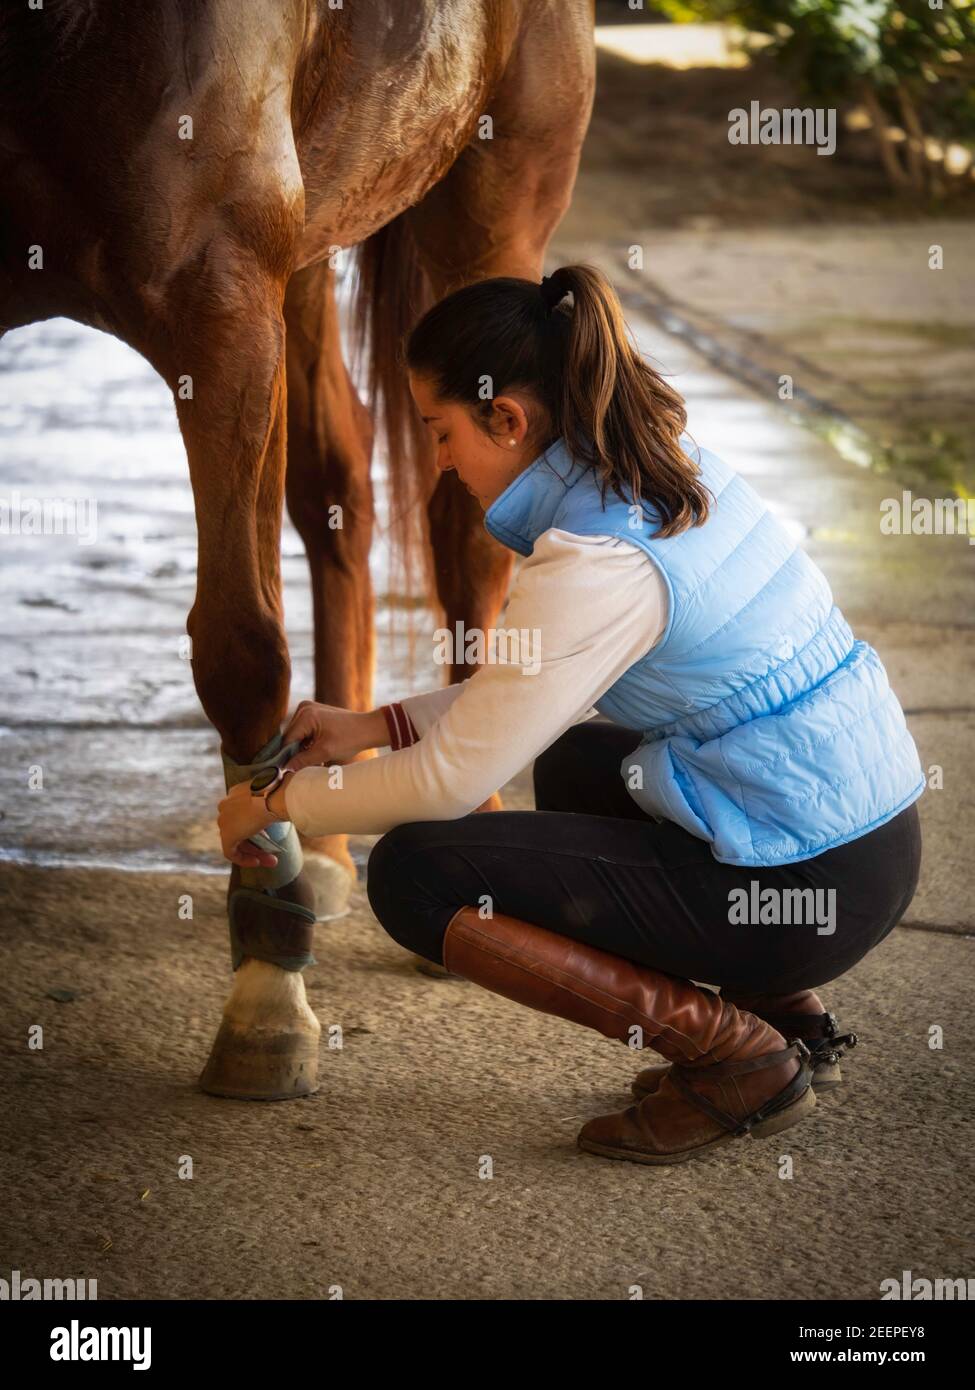 Chica joven con chaleco azul preparando a su caballo para montar en la  cuadra Stock Photo - Alamy